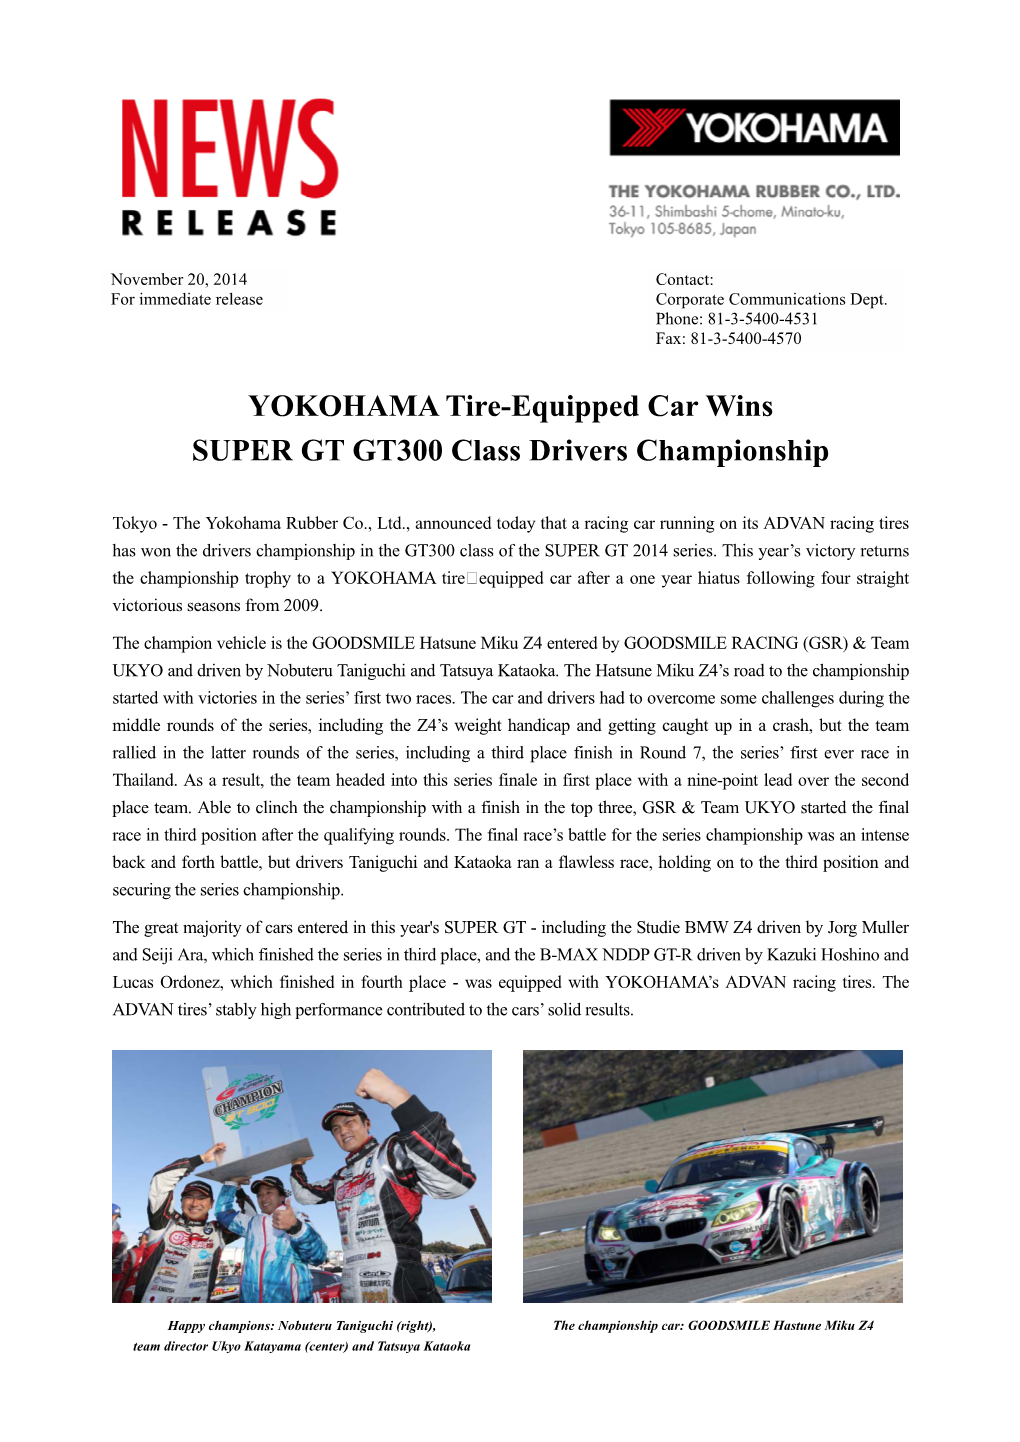 YOKOHAMA Tire-Equipped Car Wins SUPER GT GT300 Class Drivers Championship